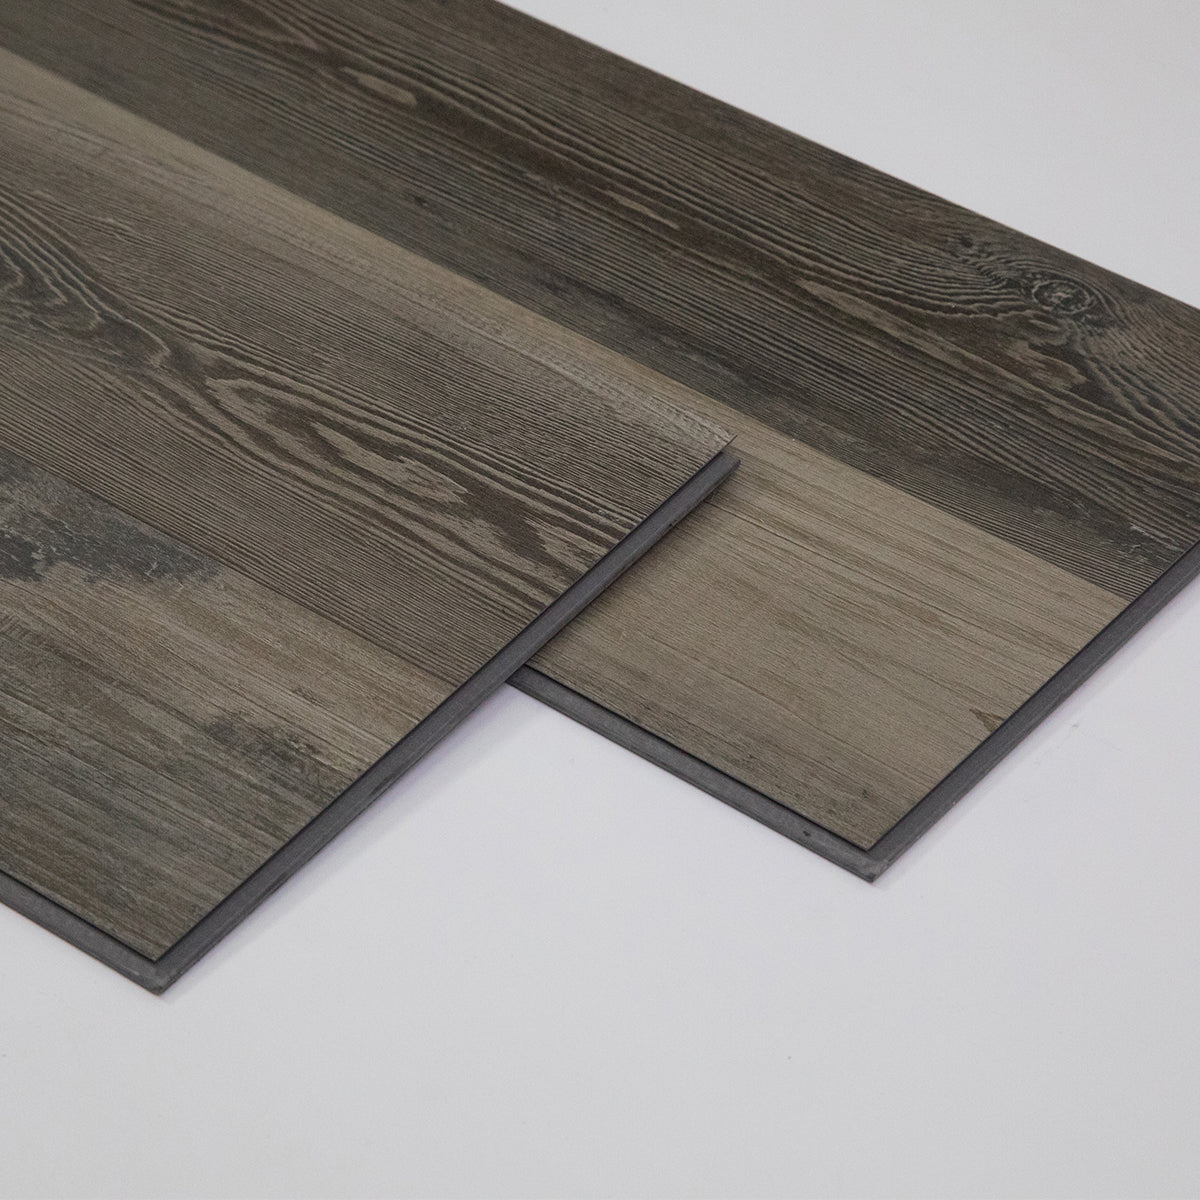 23.6 sq.ft Gray Maple Click Floating Floor Rigid Core Luxury Vinyl Plank Flooring - Foam Back